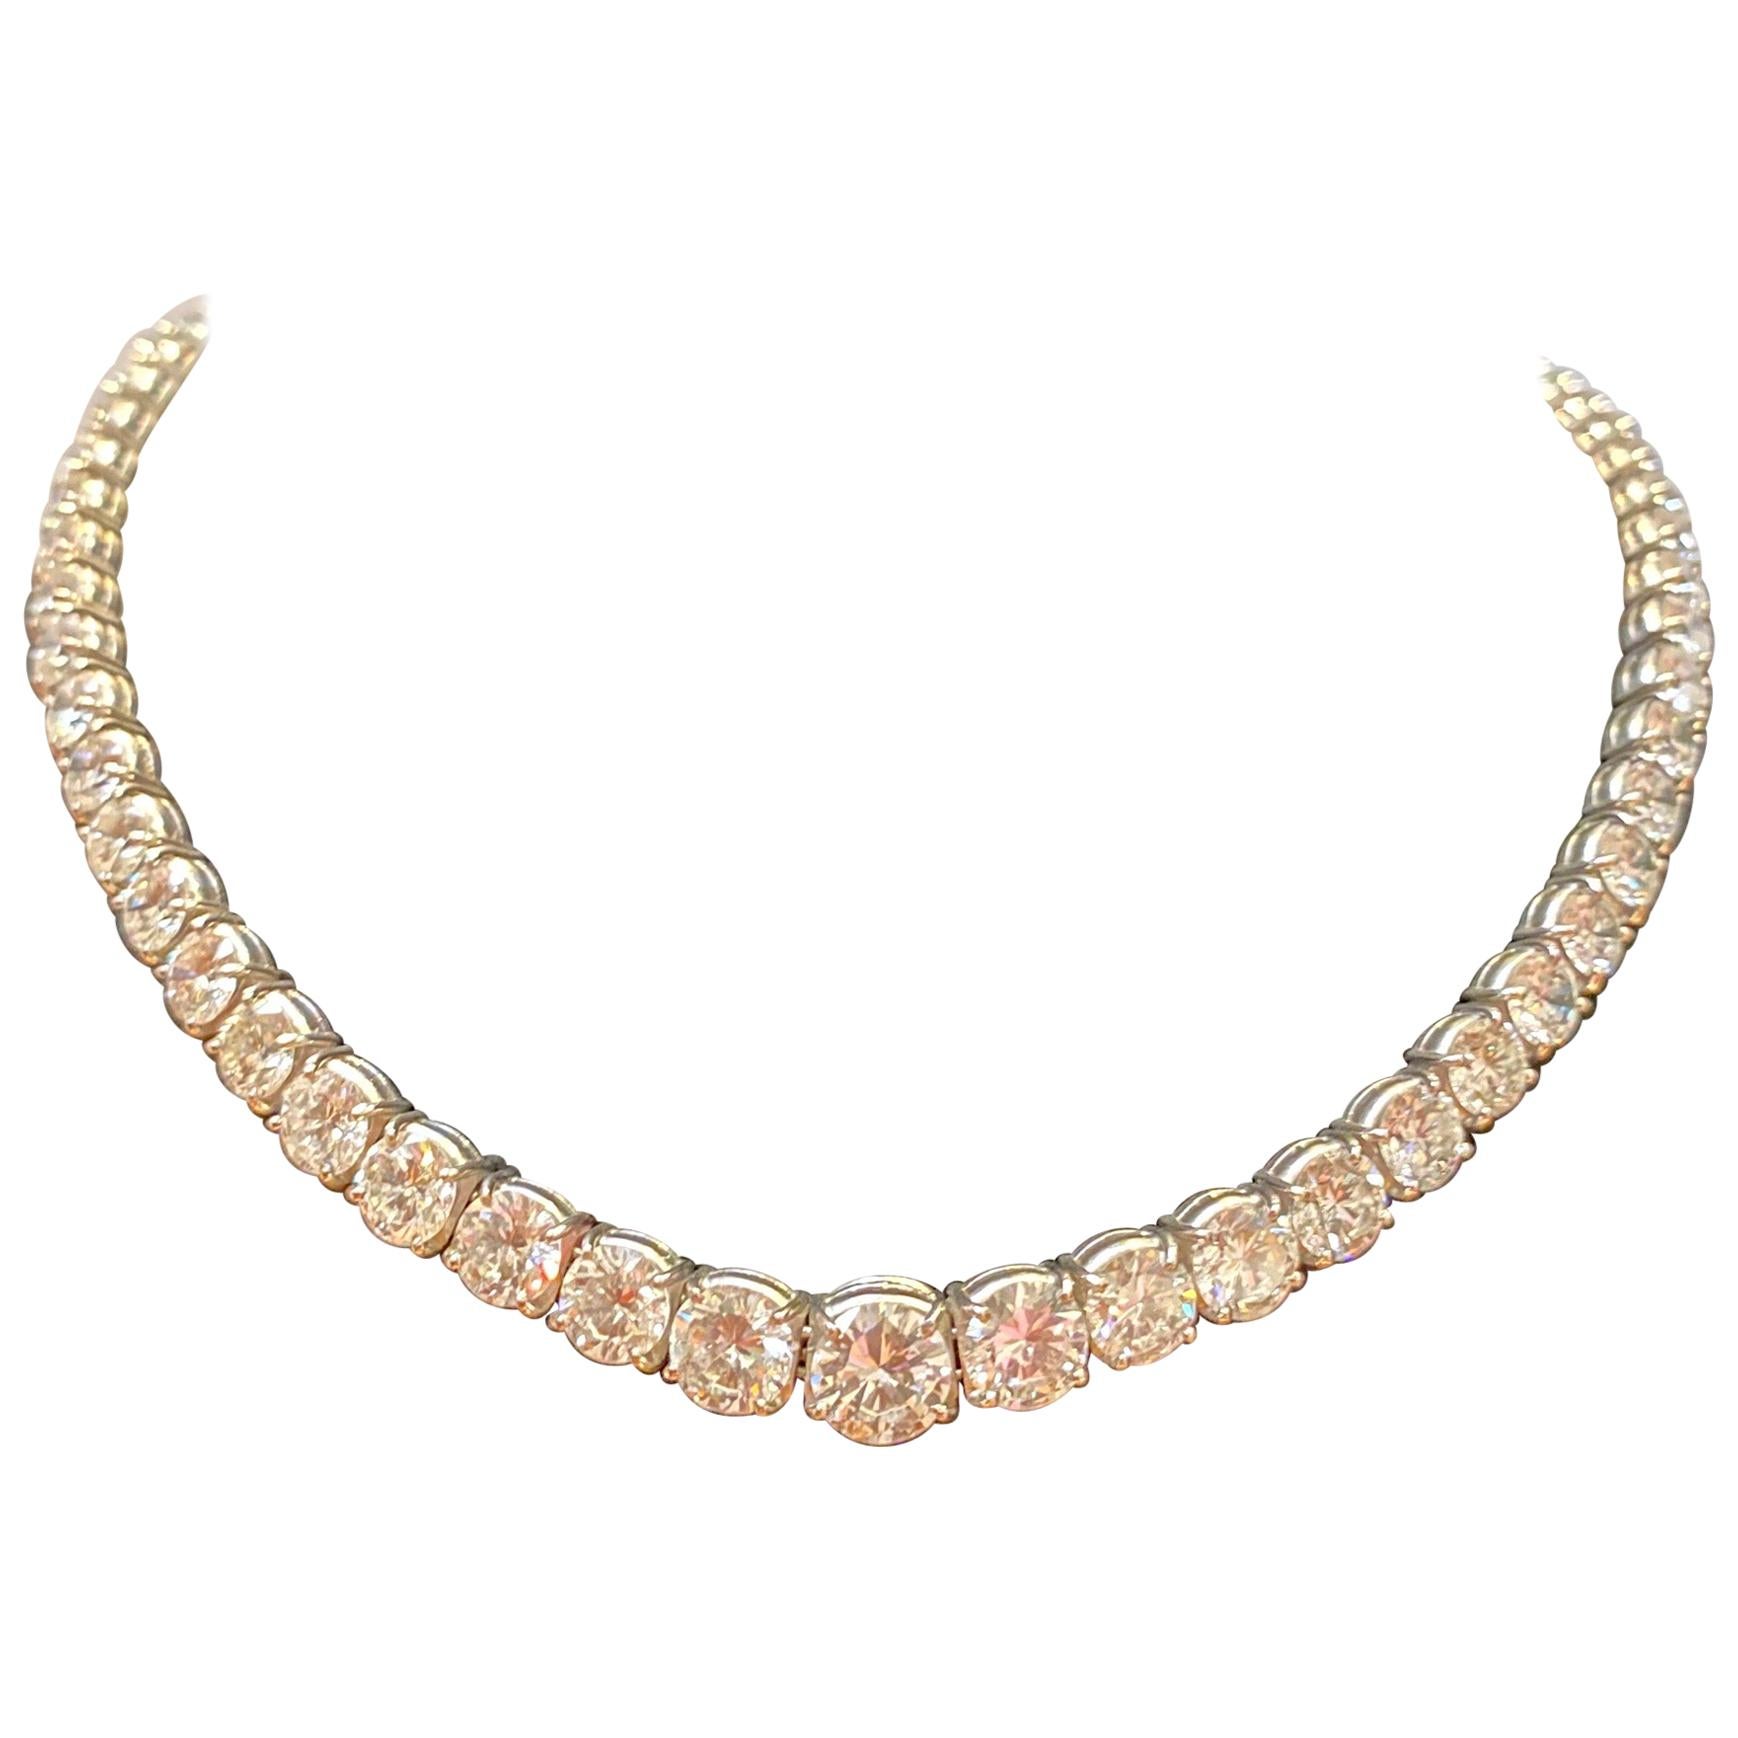 Graduated Platinum 32 carat Diamond Necklace